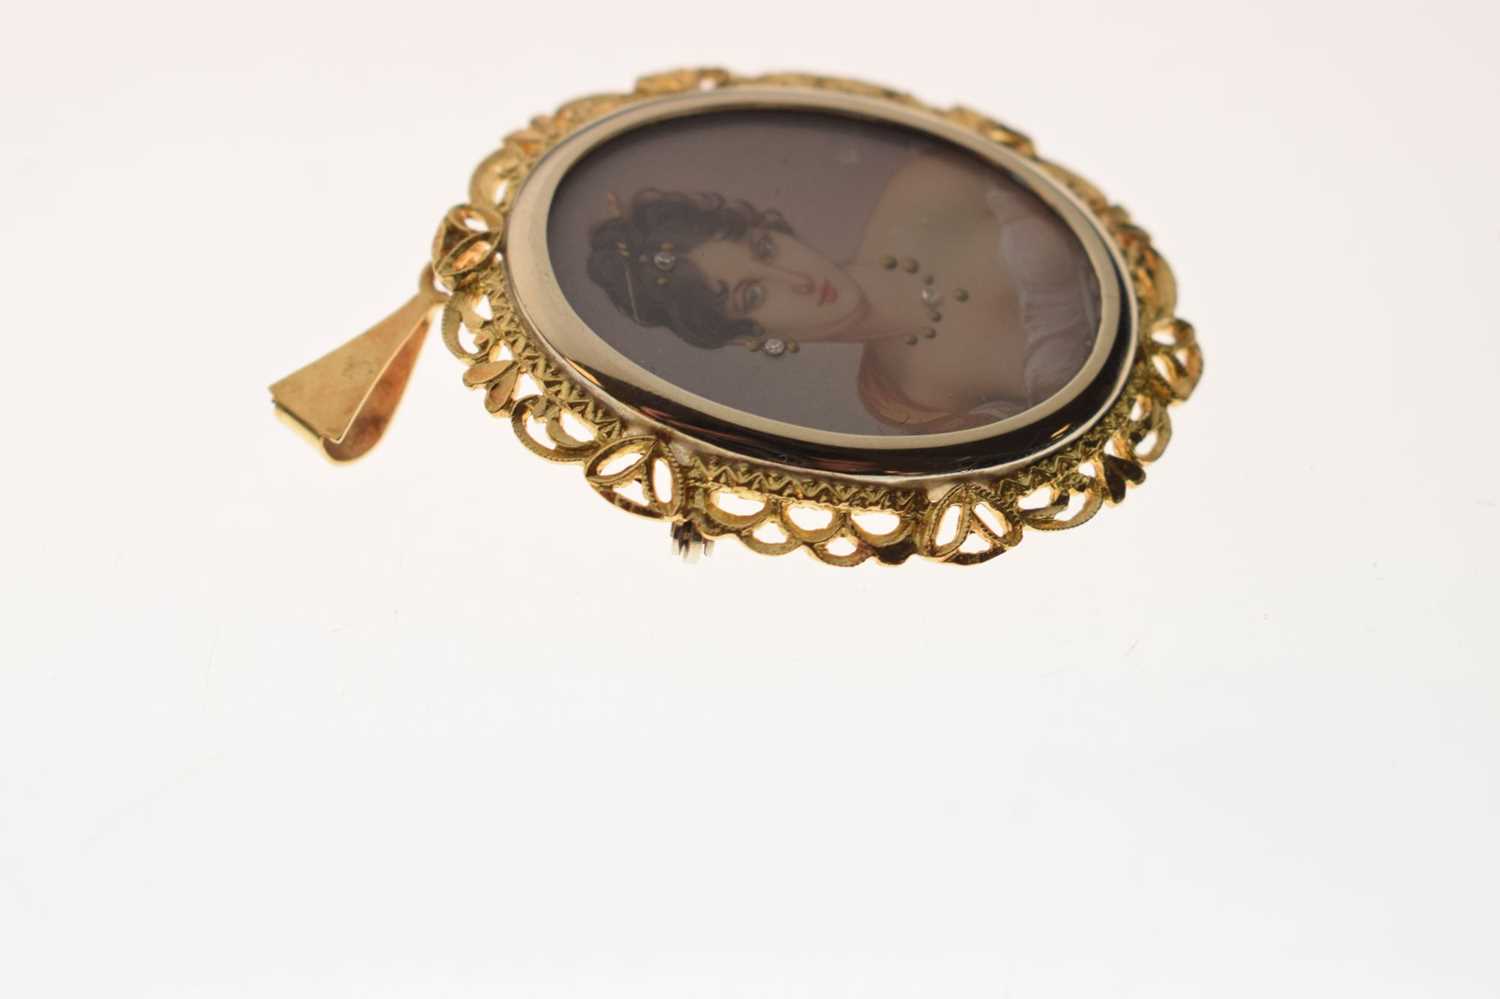 Yellow metal (750) miniature portrait brooch / pendant - Image 4 of 6